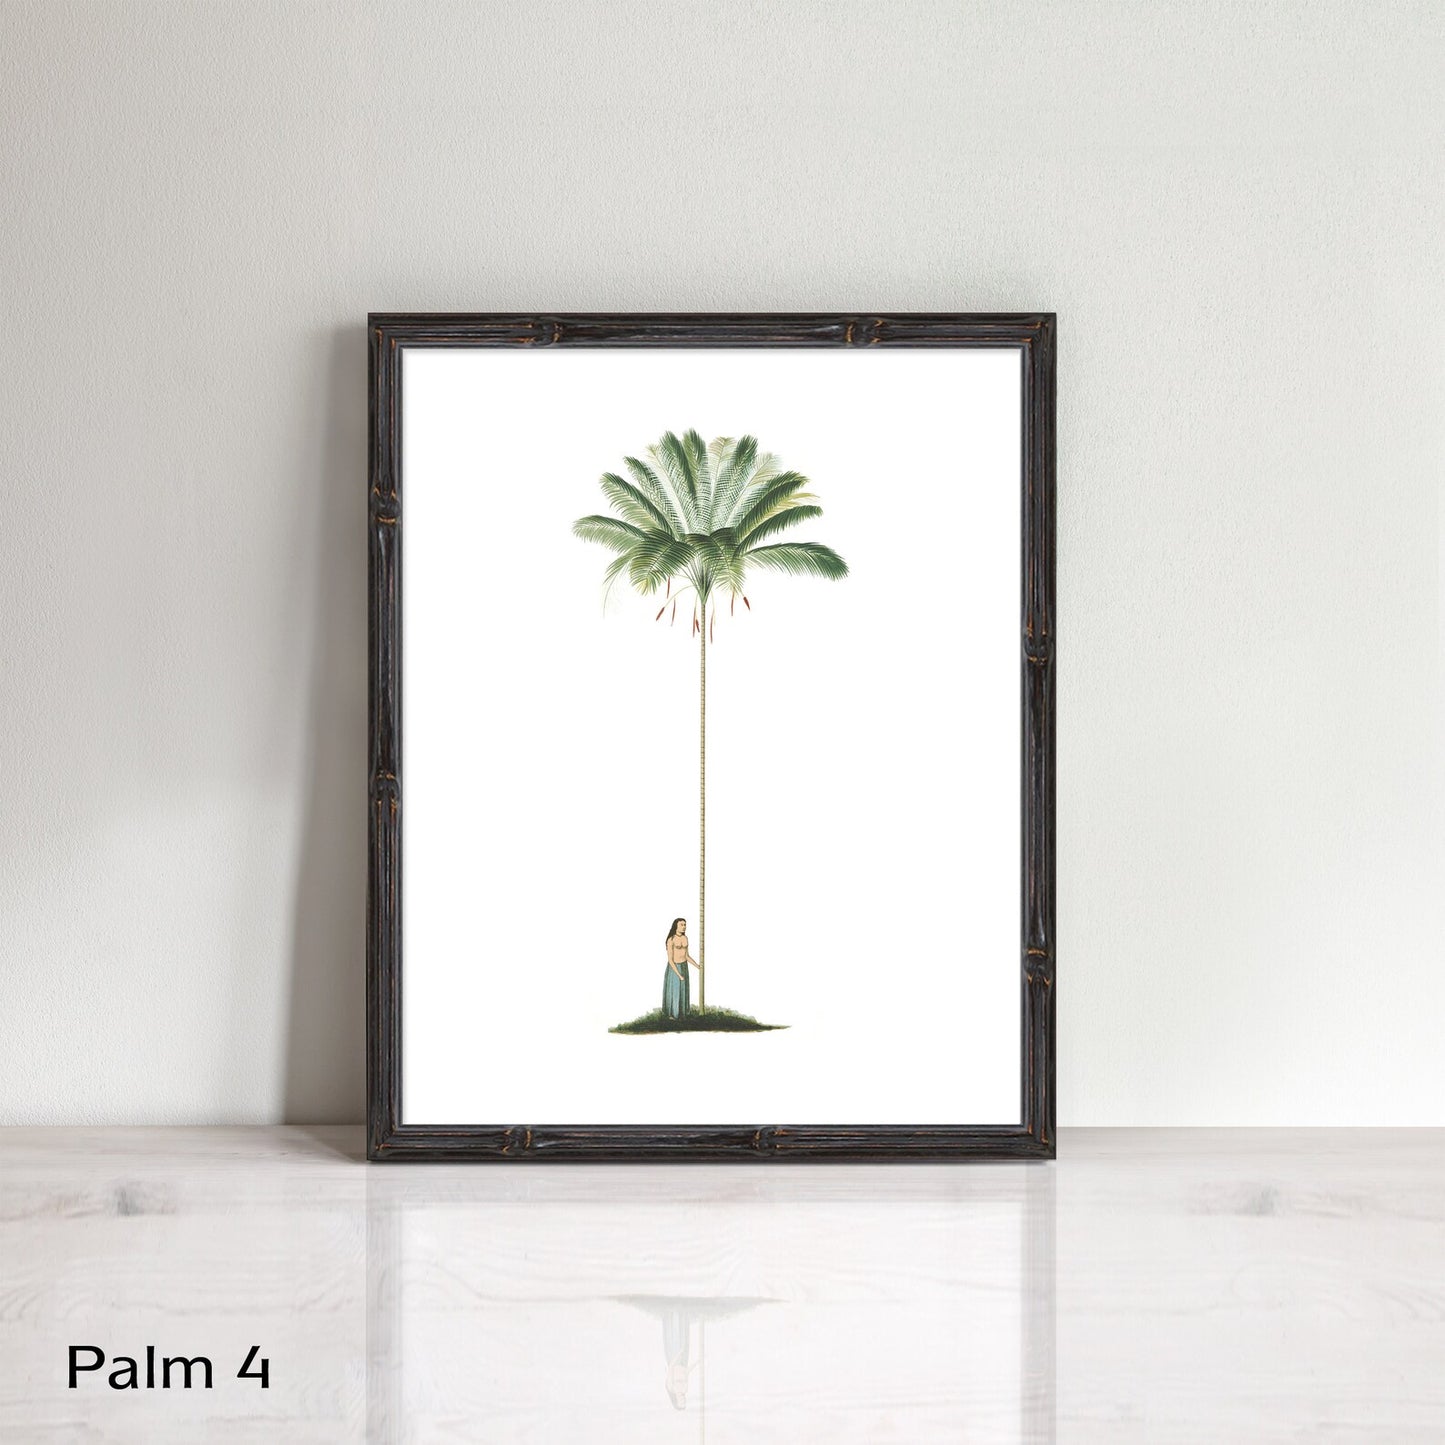 Vintage palm tree prints